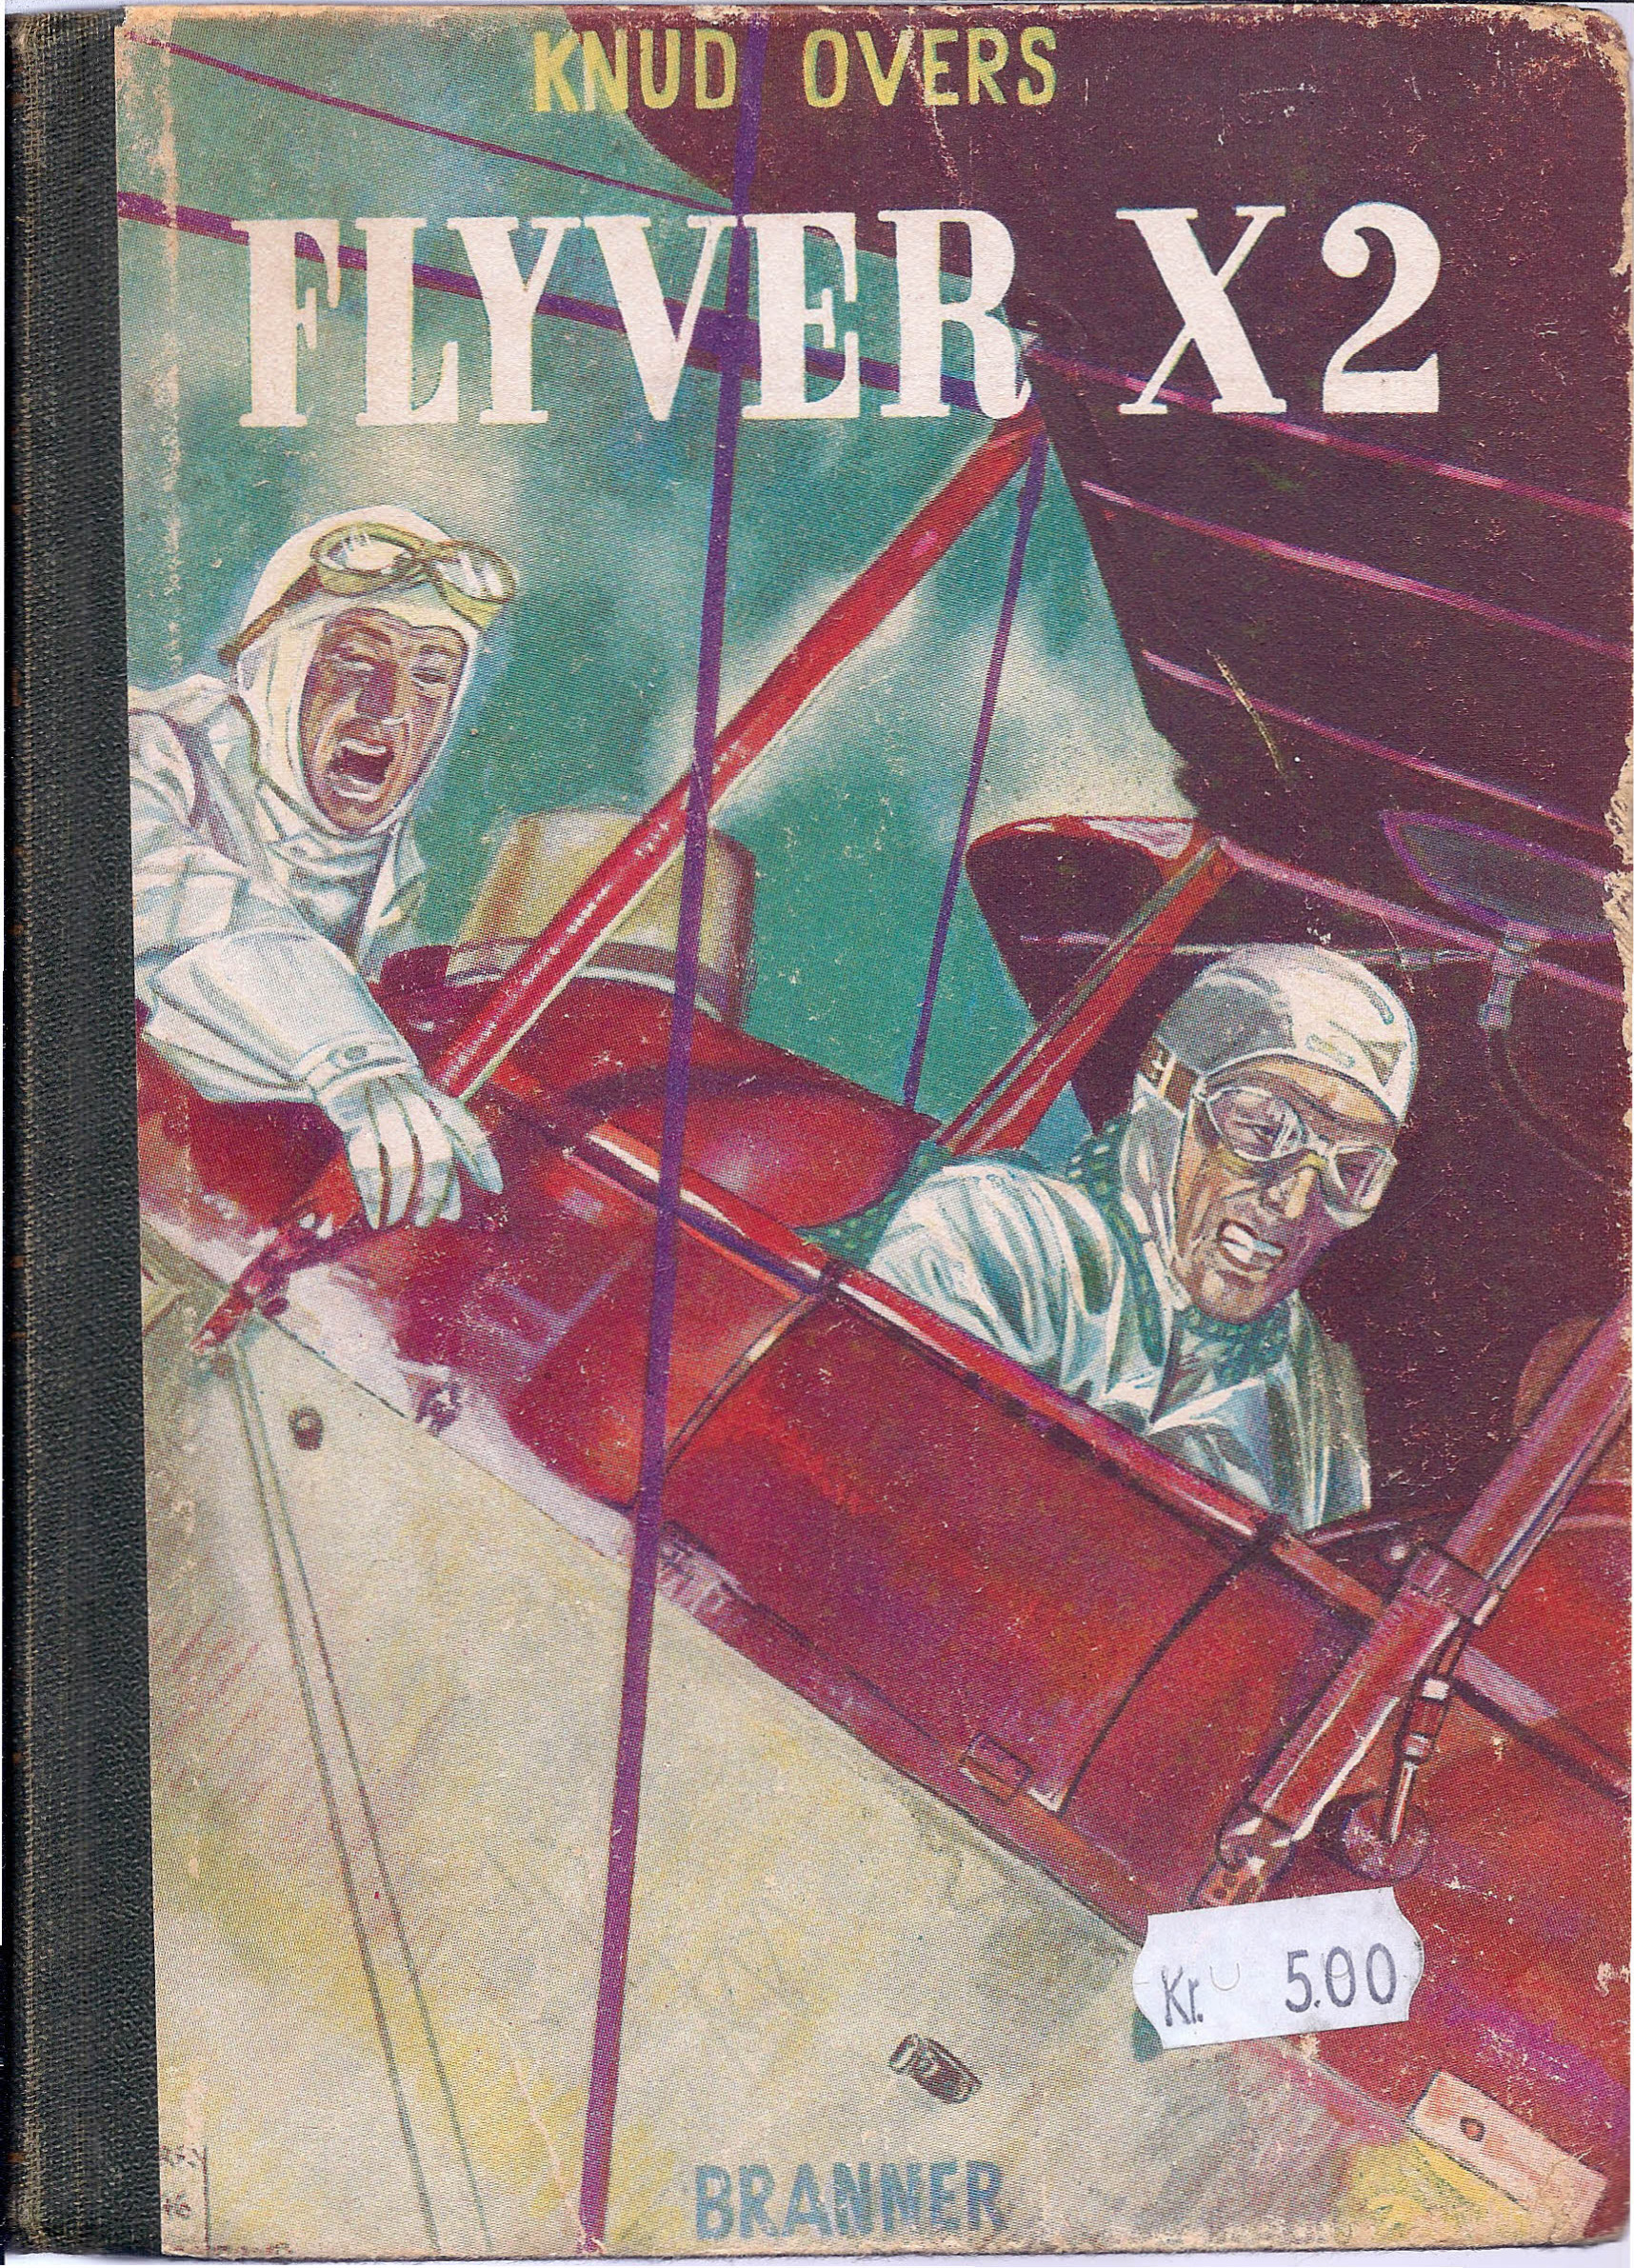 Flyver X2 - Knud Overs-1